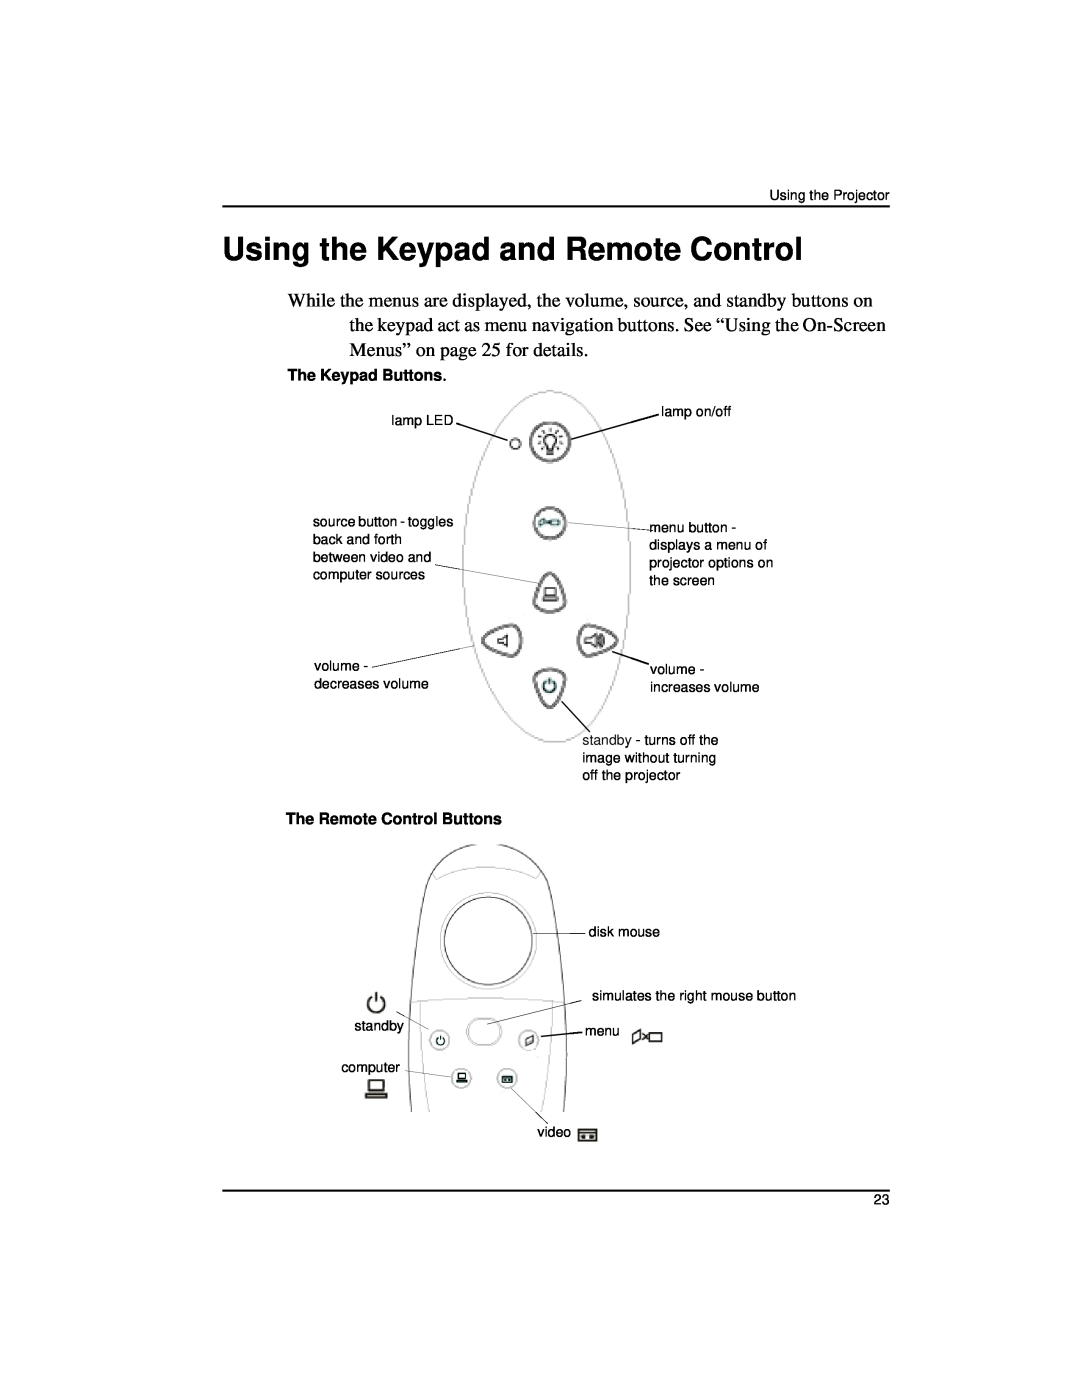 Kodak DP2000 manual Using the Keypad and Remote Control, The Keypad Buttons, The Remote Control Buttons 